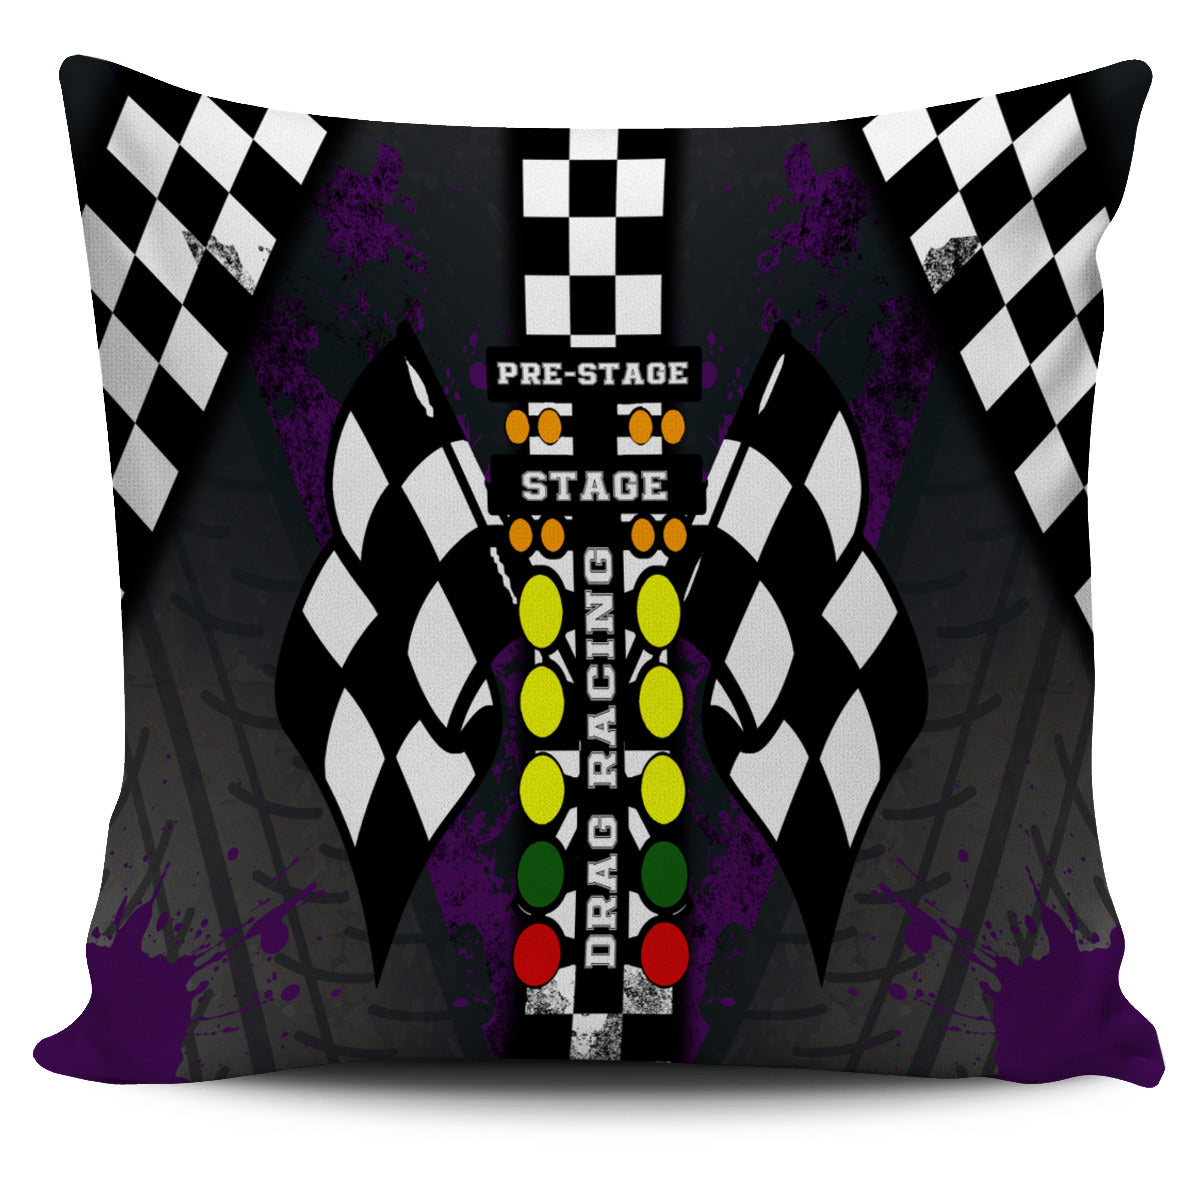 Drag Racing Pillow Covers Purple